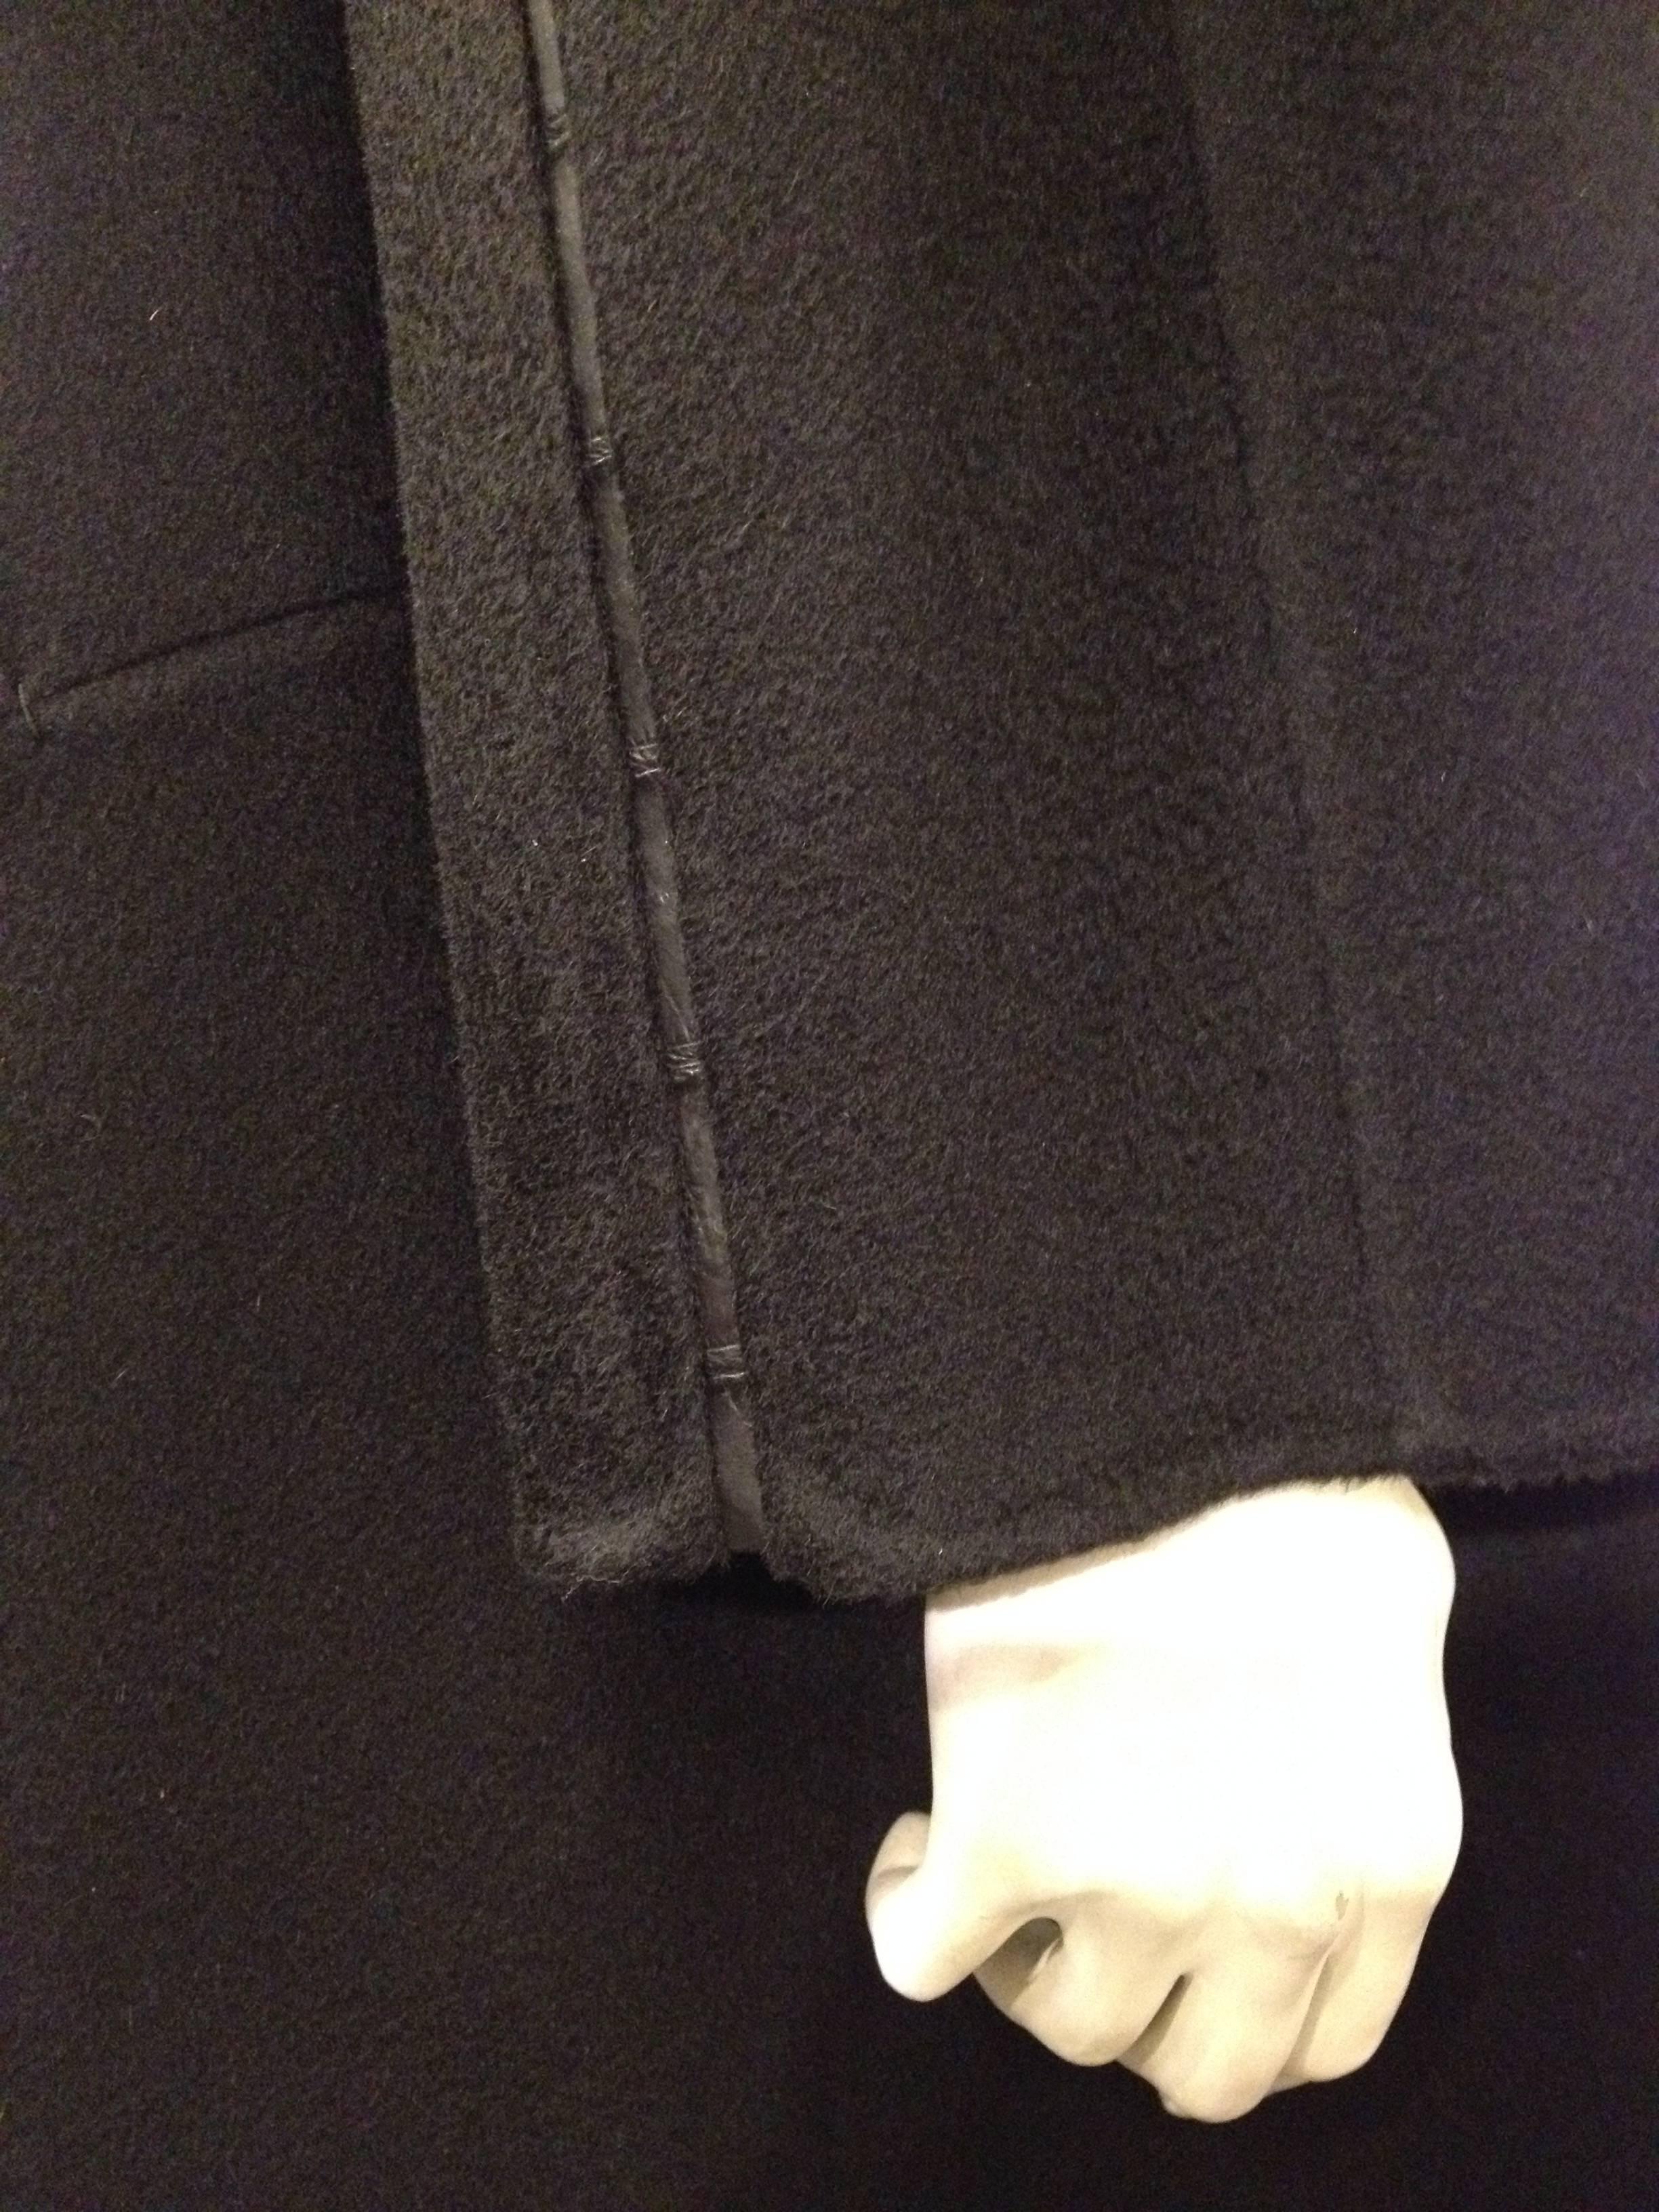 Chado Black Cashmere Coat with Alligator Insets Size L 2